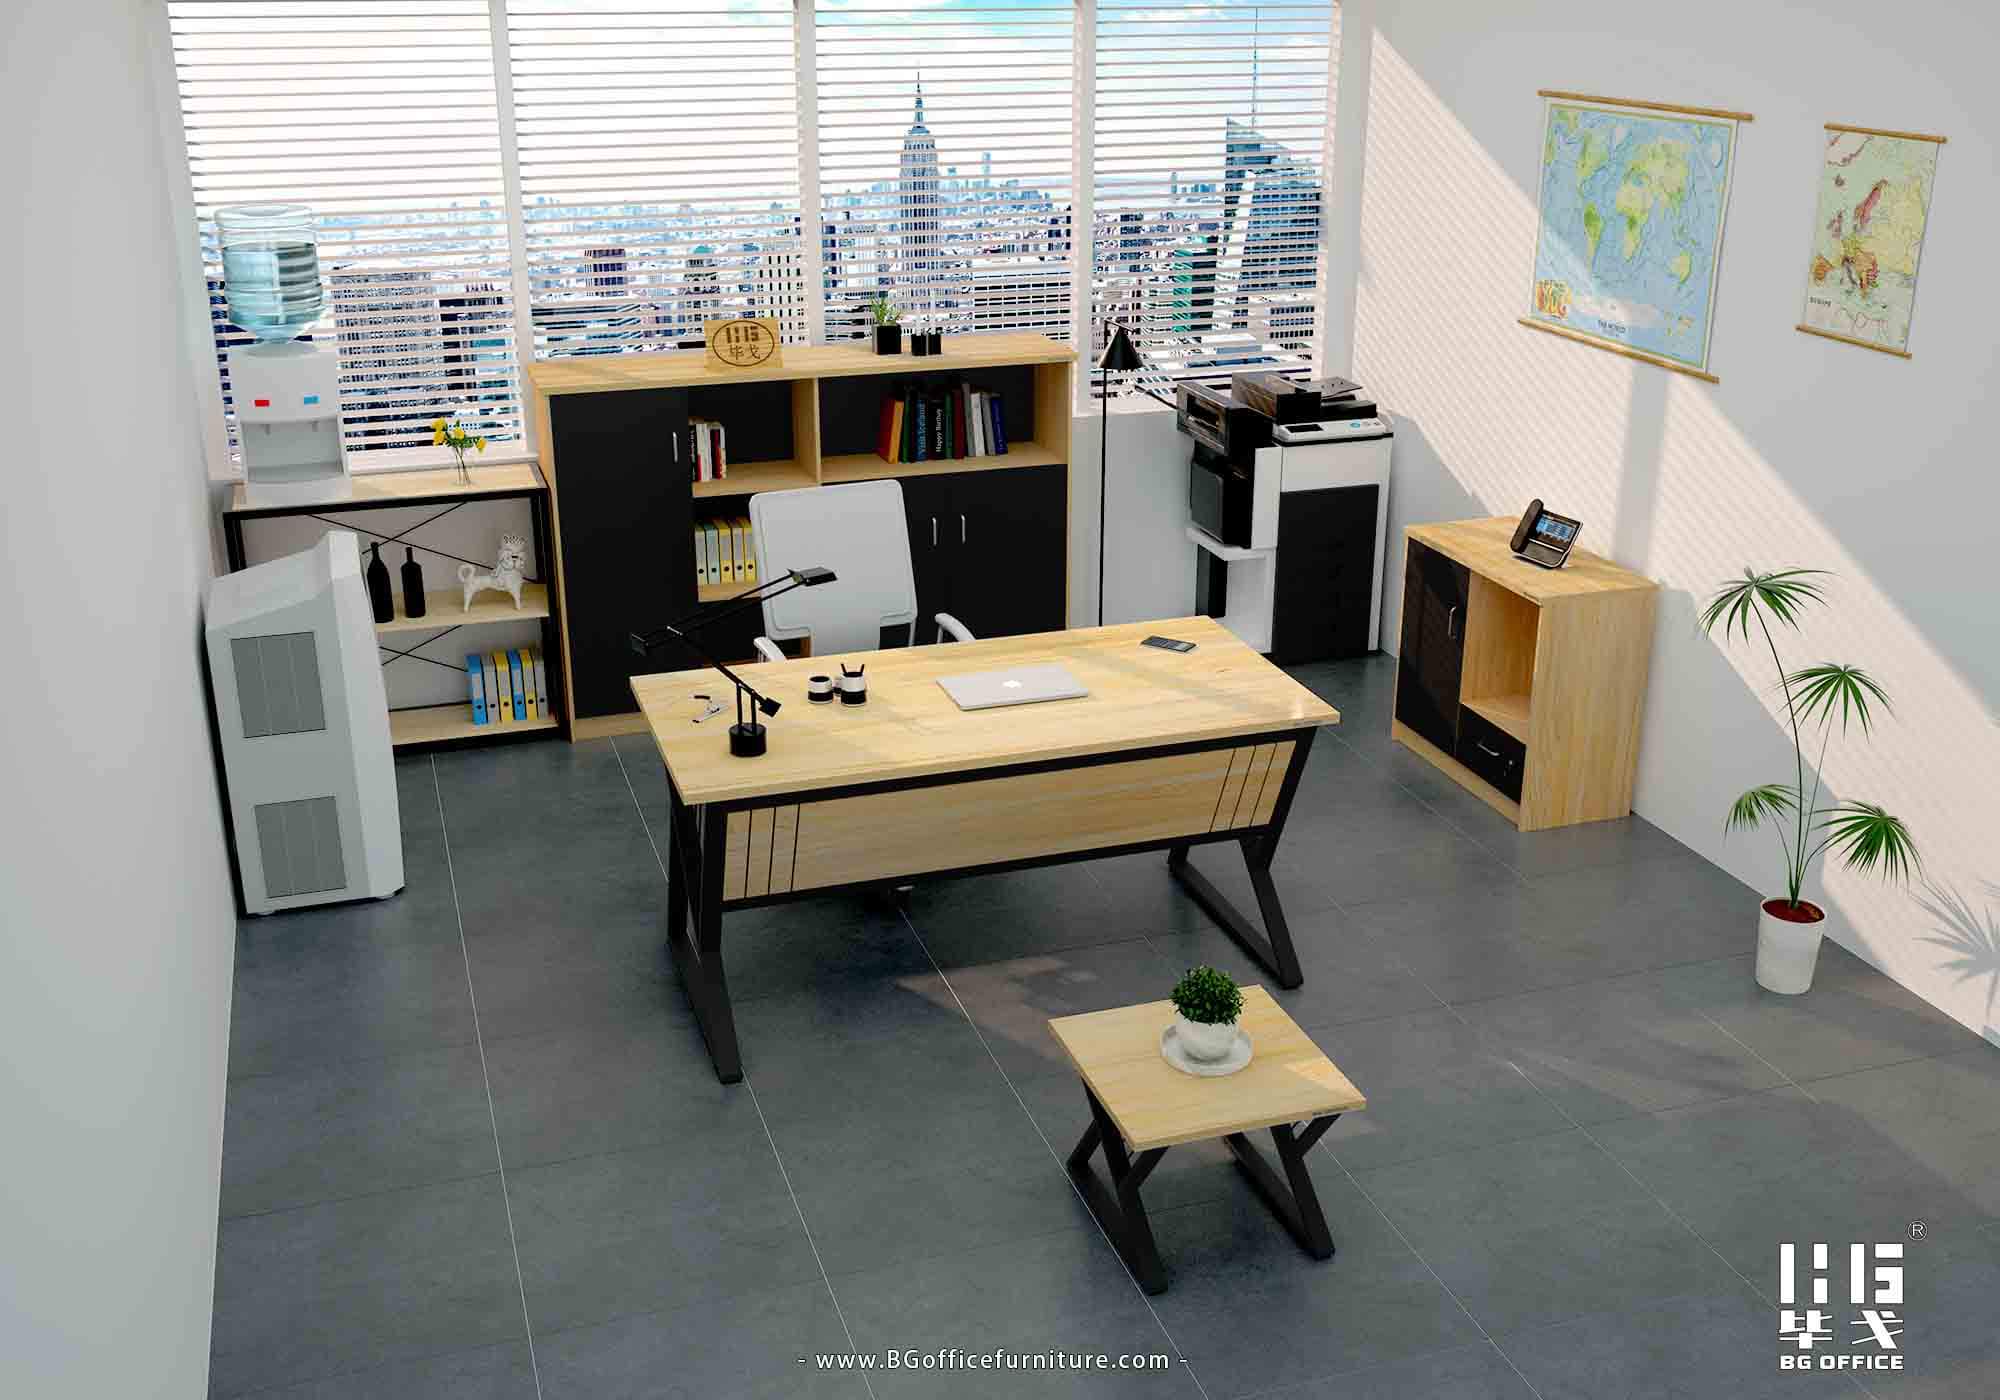 Walnut Finish Office Table Big Boss Computer Desk Office Furniture - China  Office Furniture, Chinese Furniture